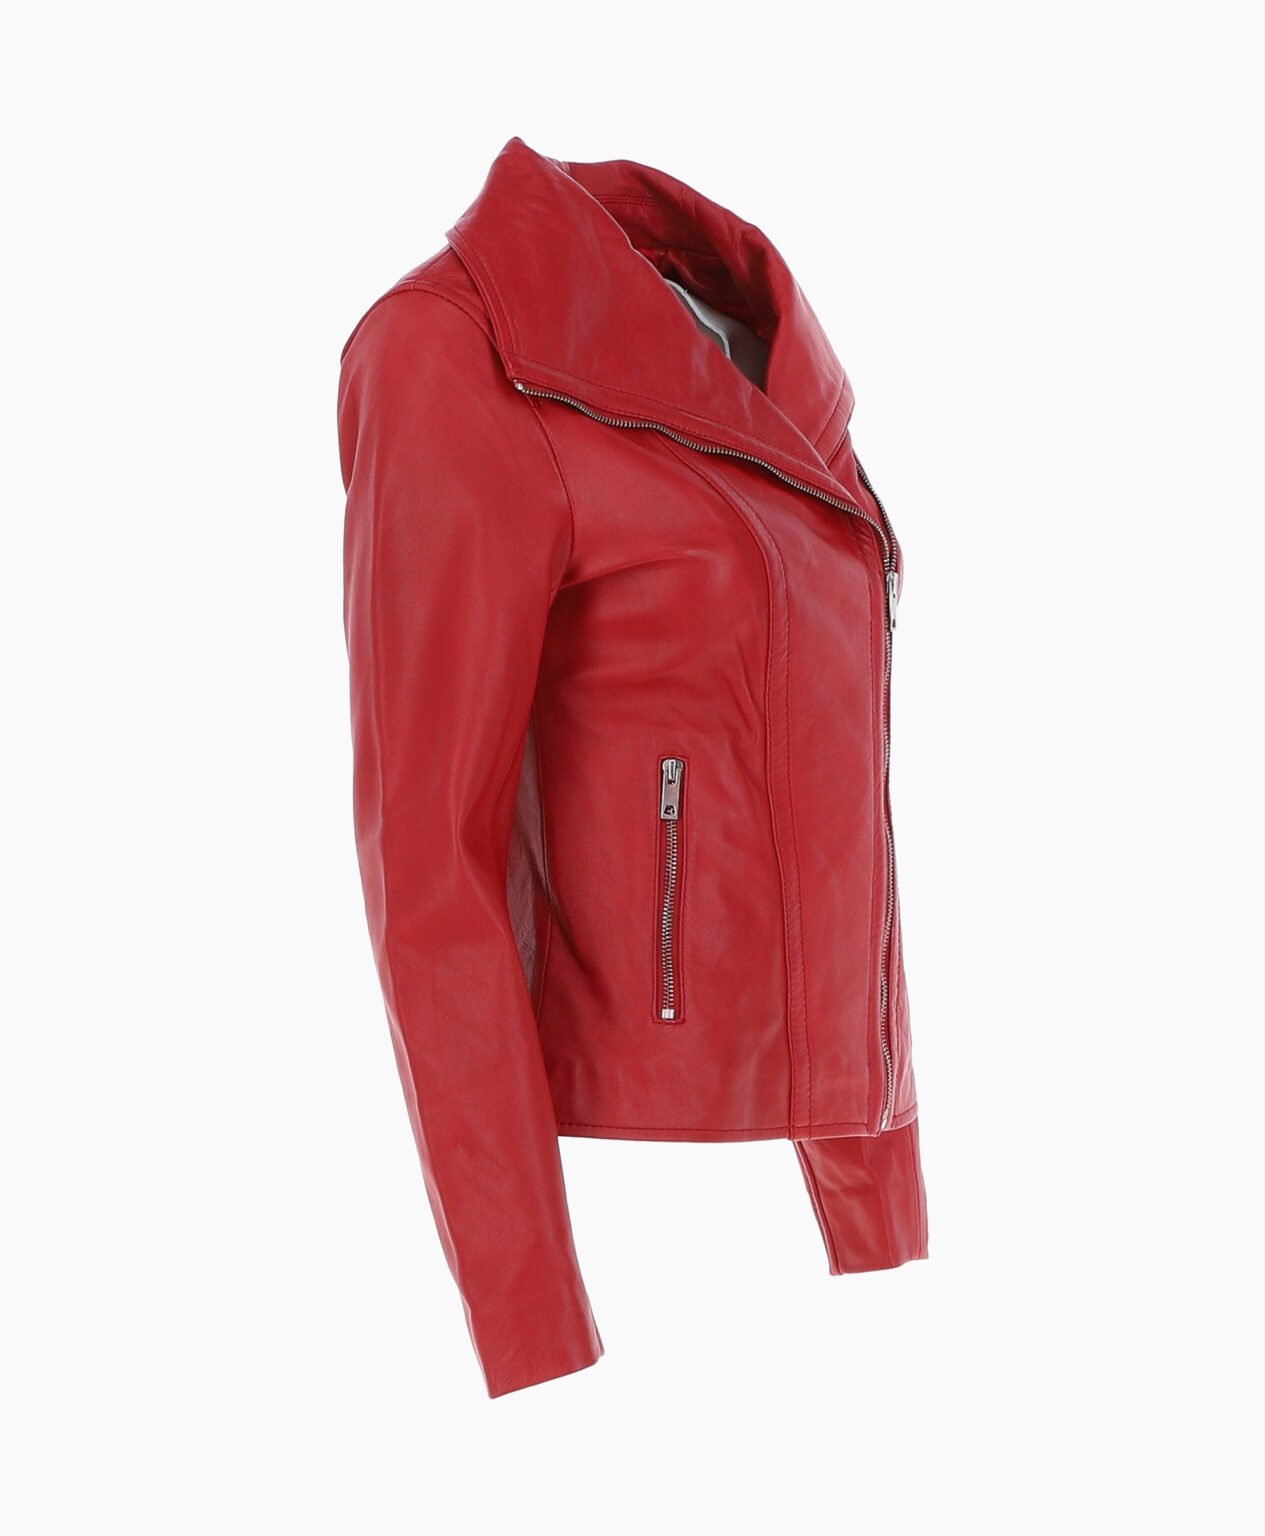 vogue-jacket-leather-jacket-fashion-collar-red-shelby-image203